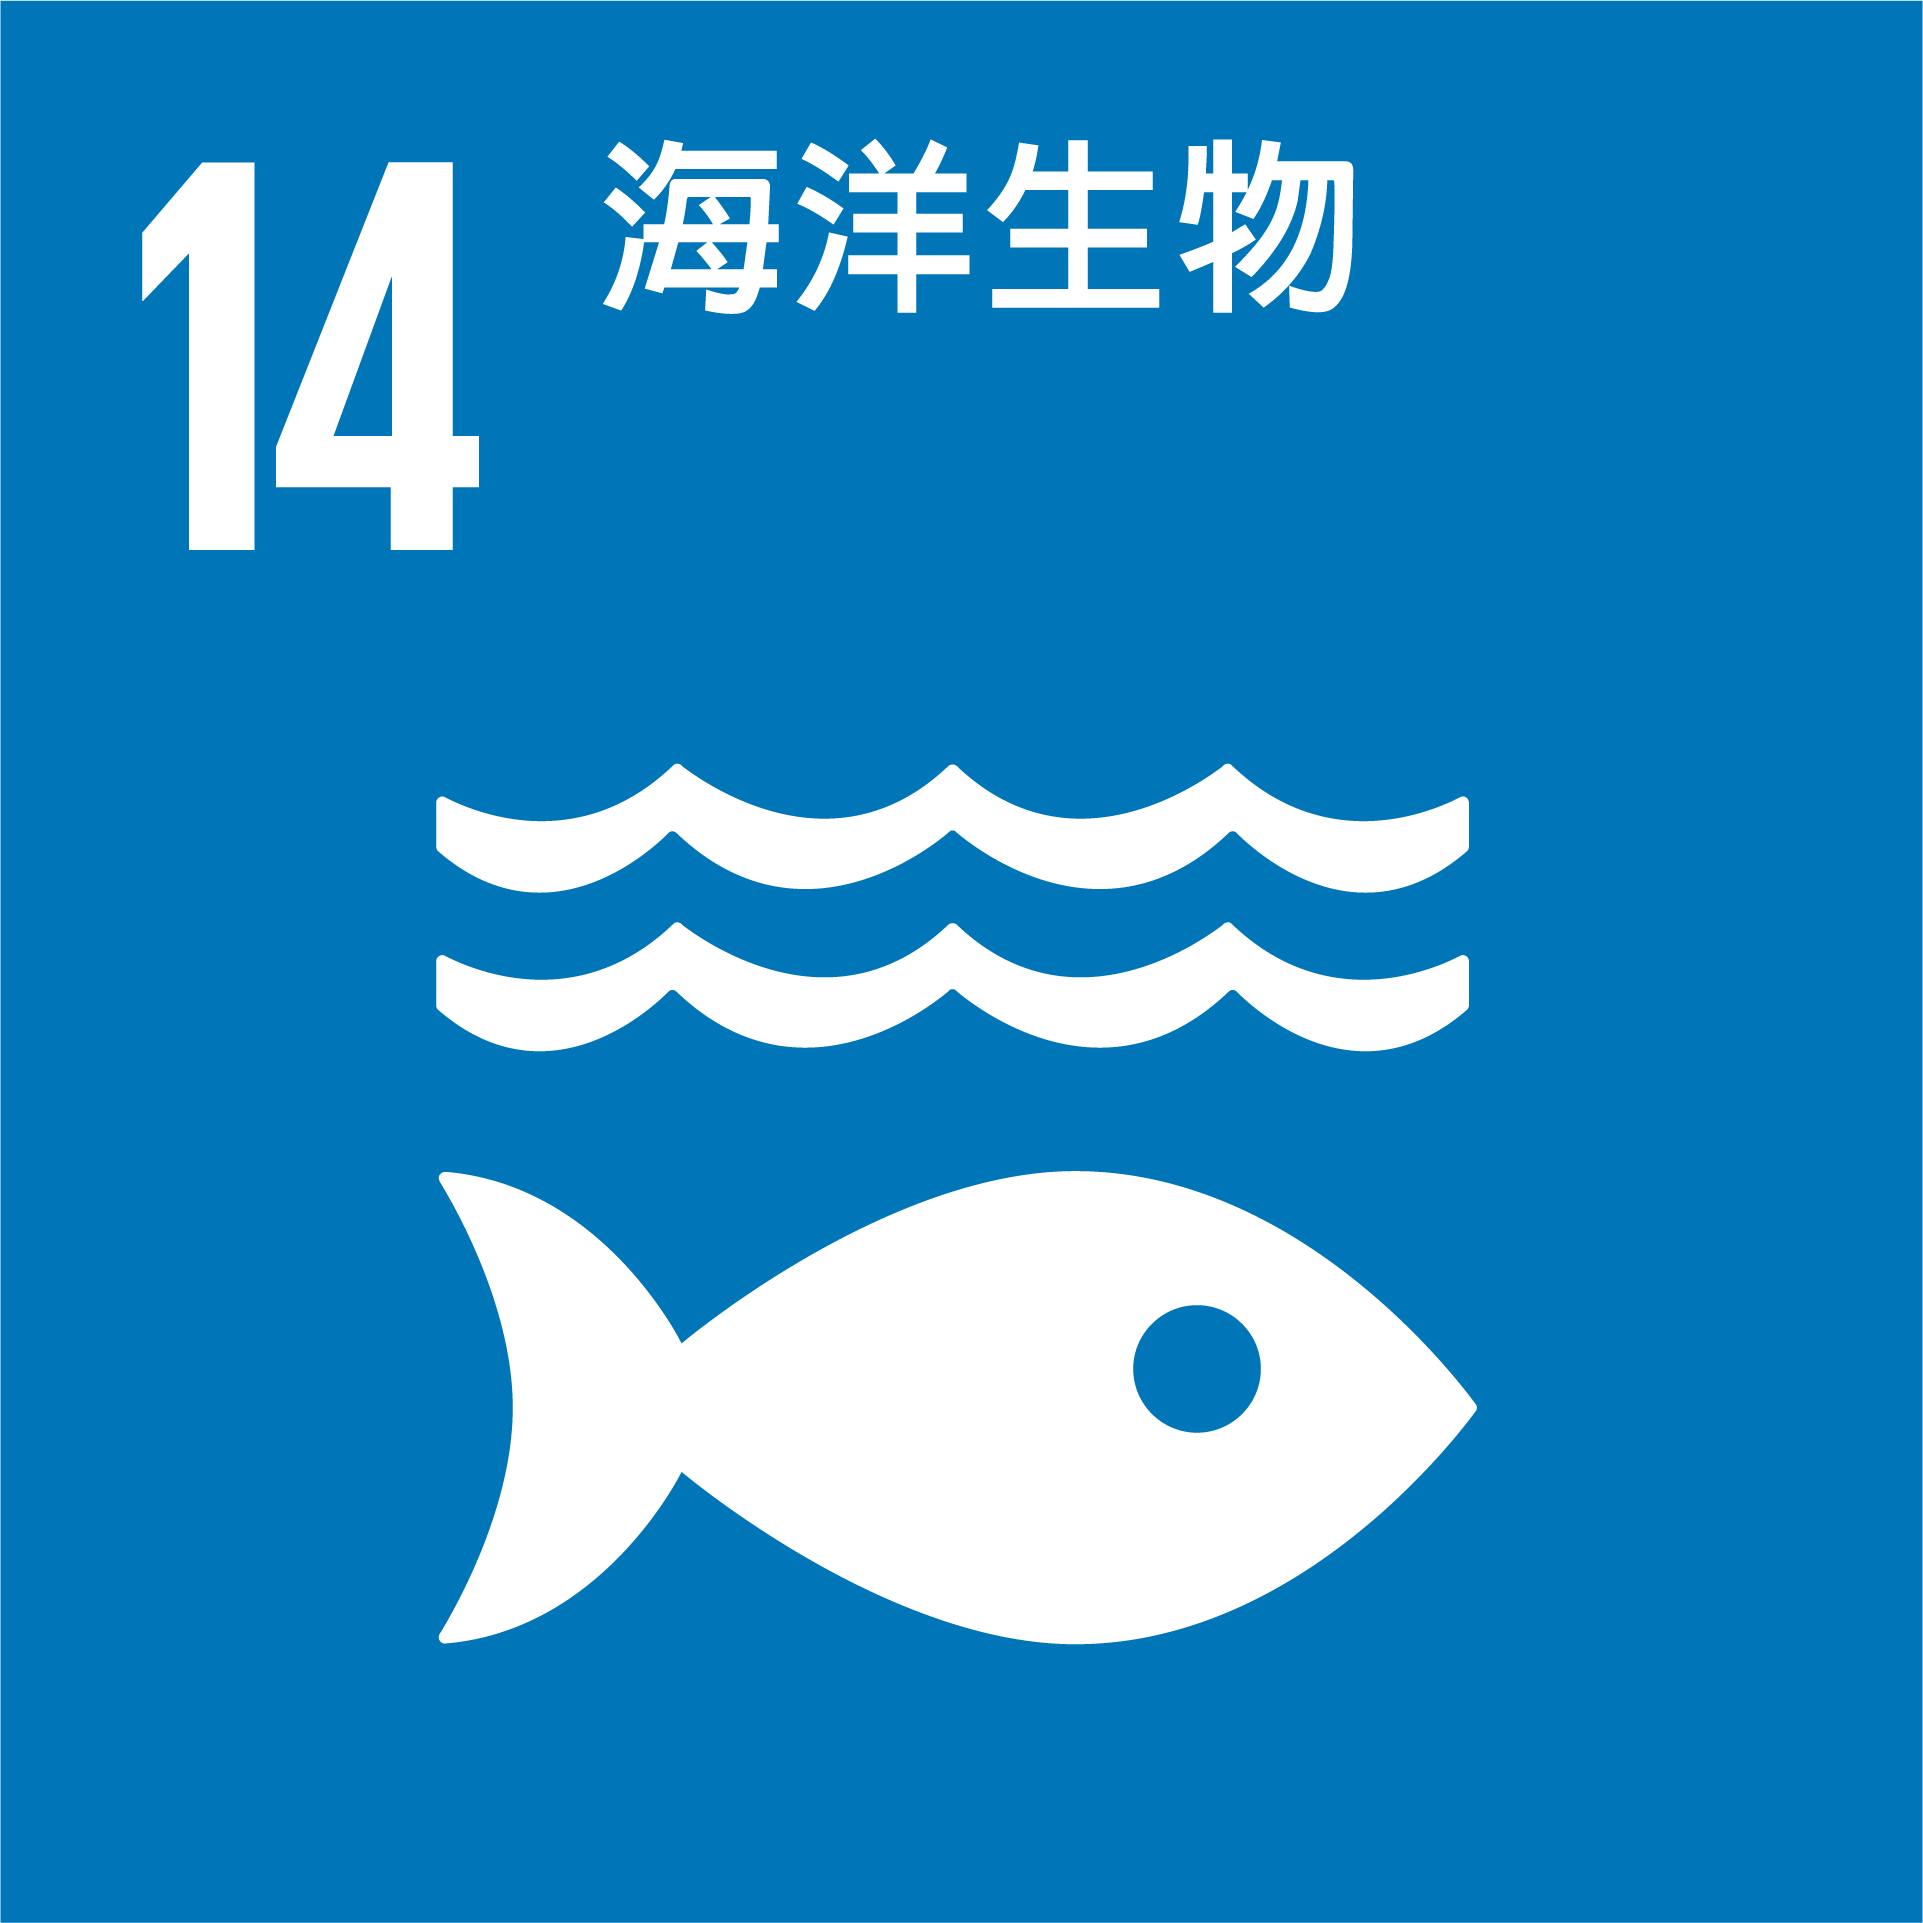 SDG vertical logo icons Chi 14